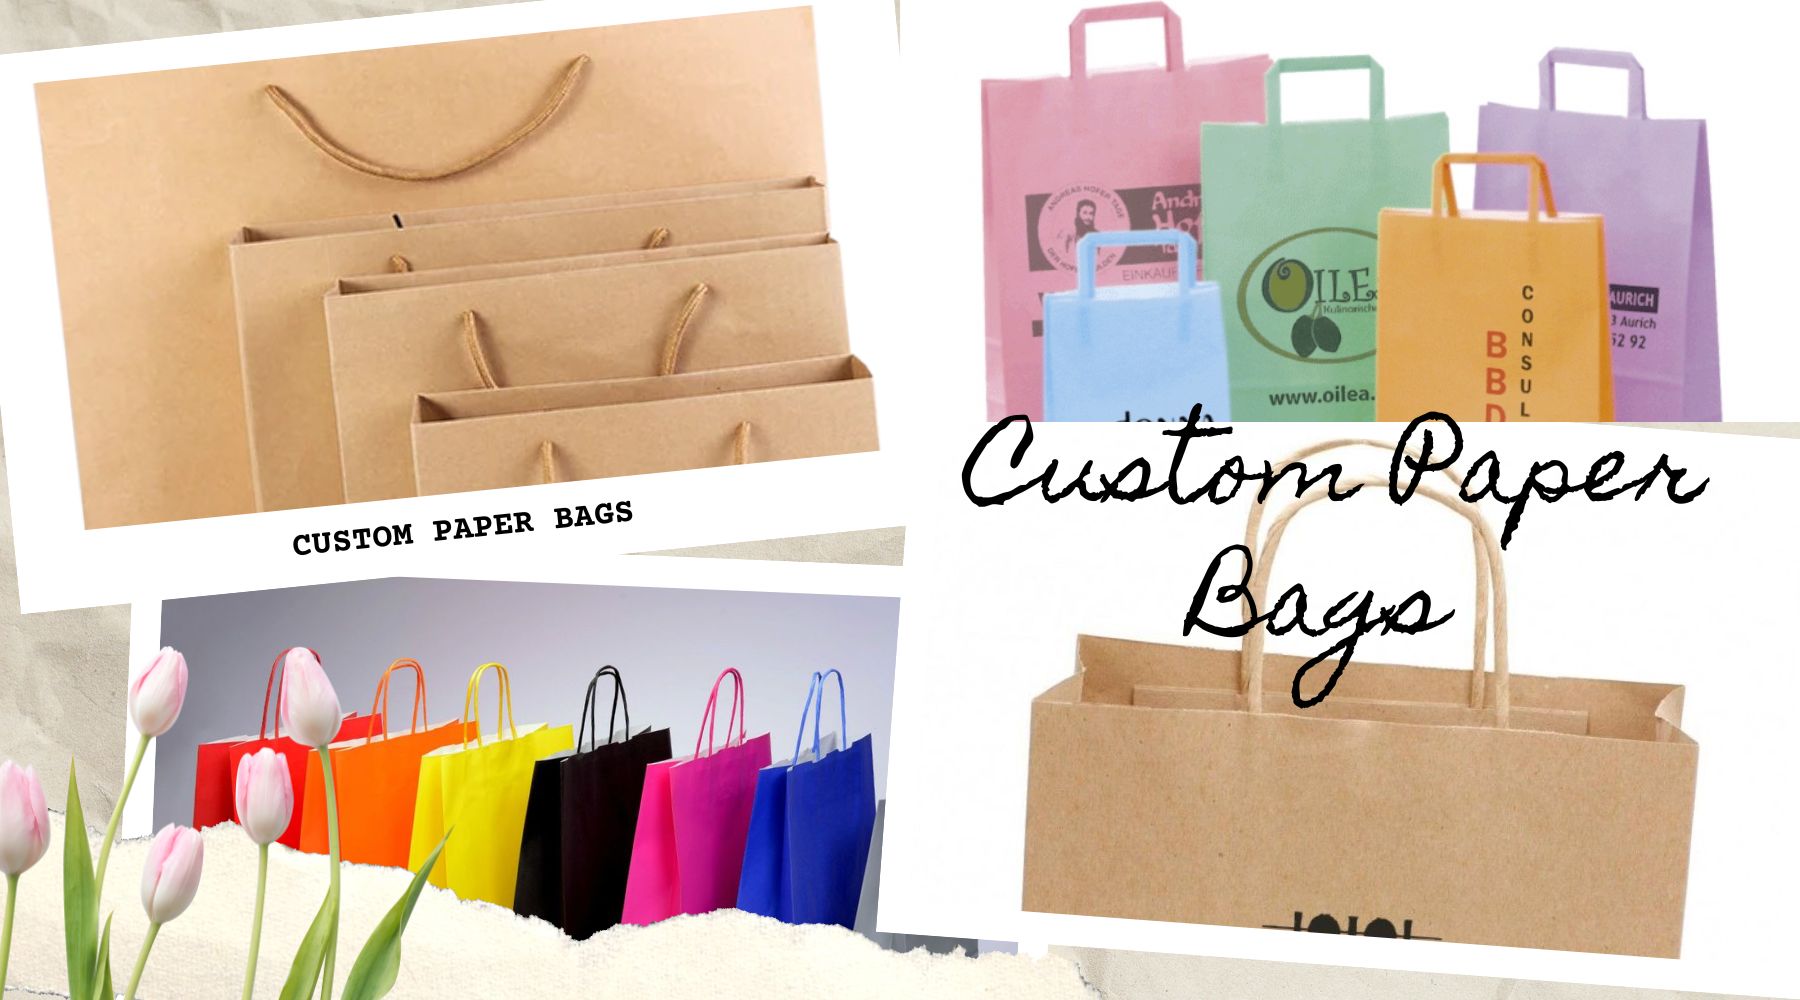 Custom Paper Bags for A Greener Tomorrow